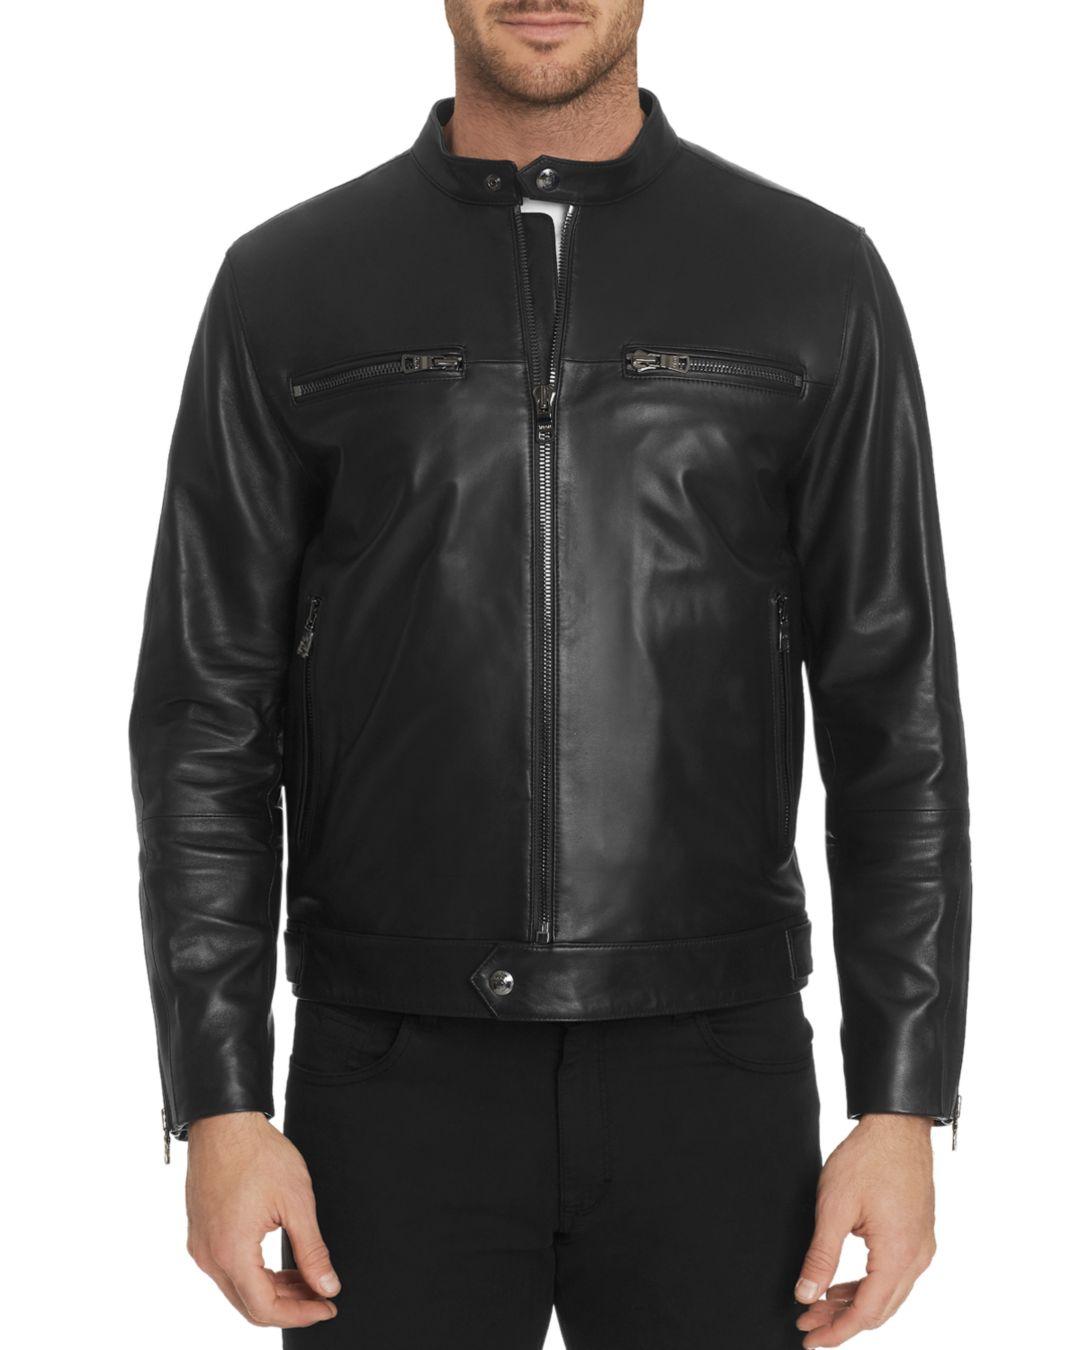 Robert Graham Brando Leather Jacket in Black for Men - Save 61% - Lyst